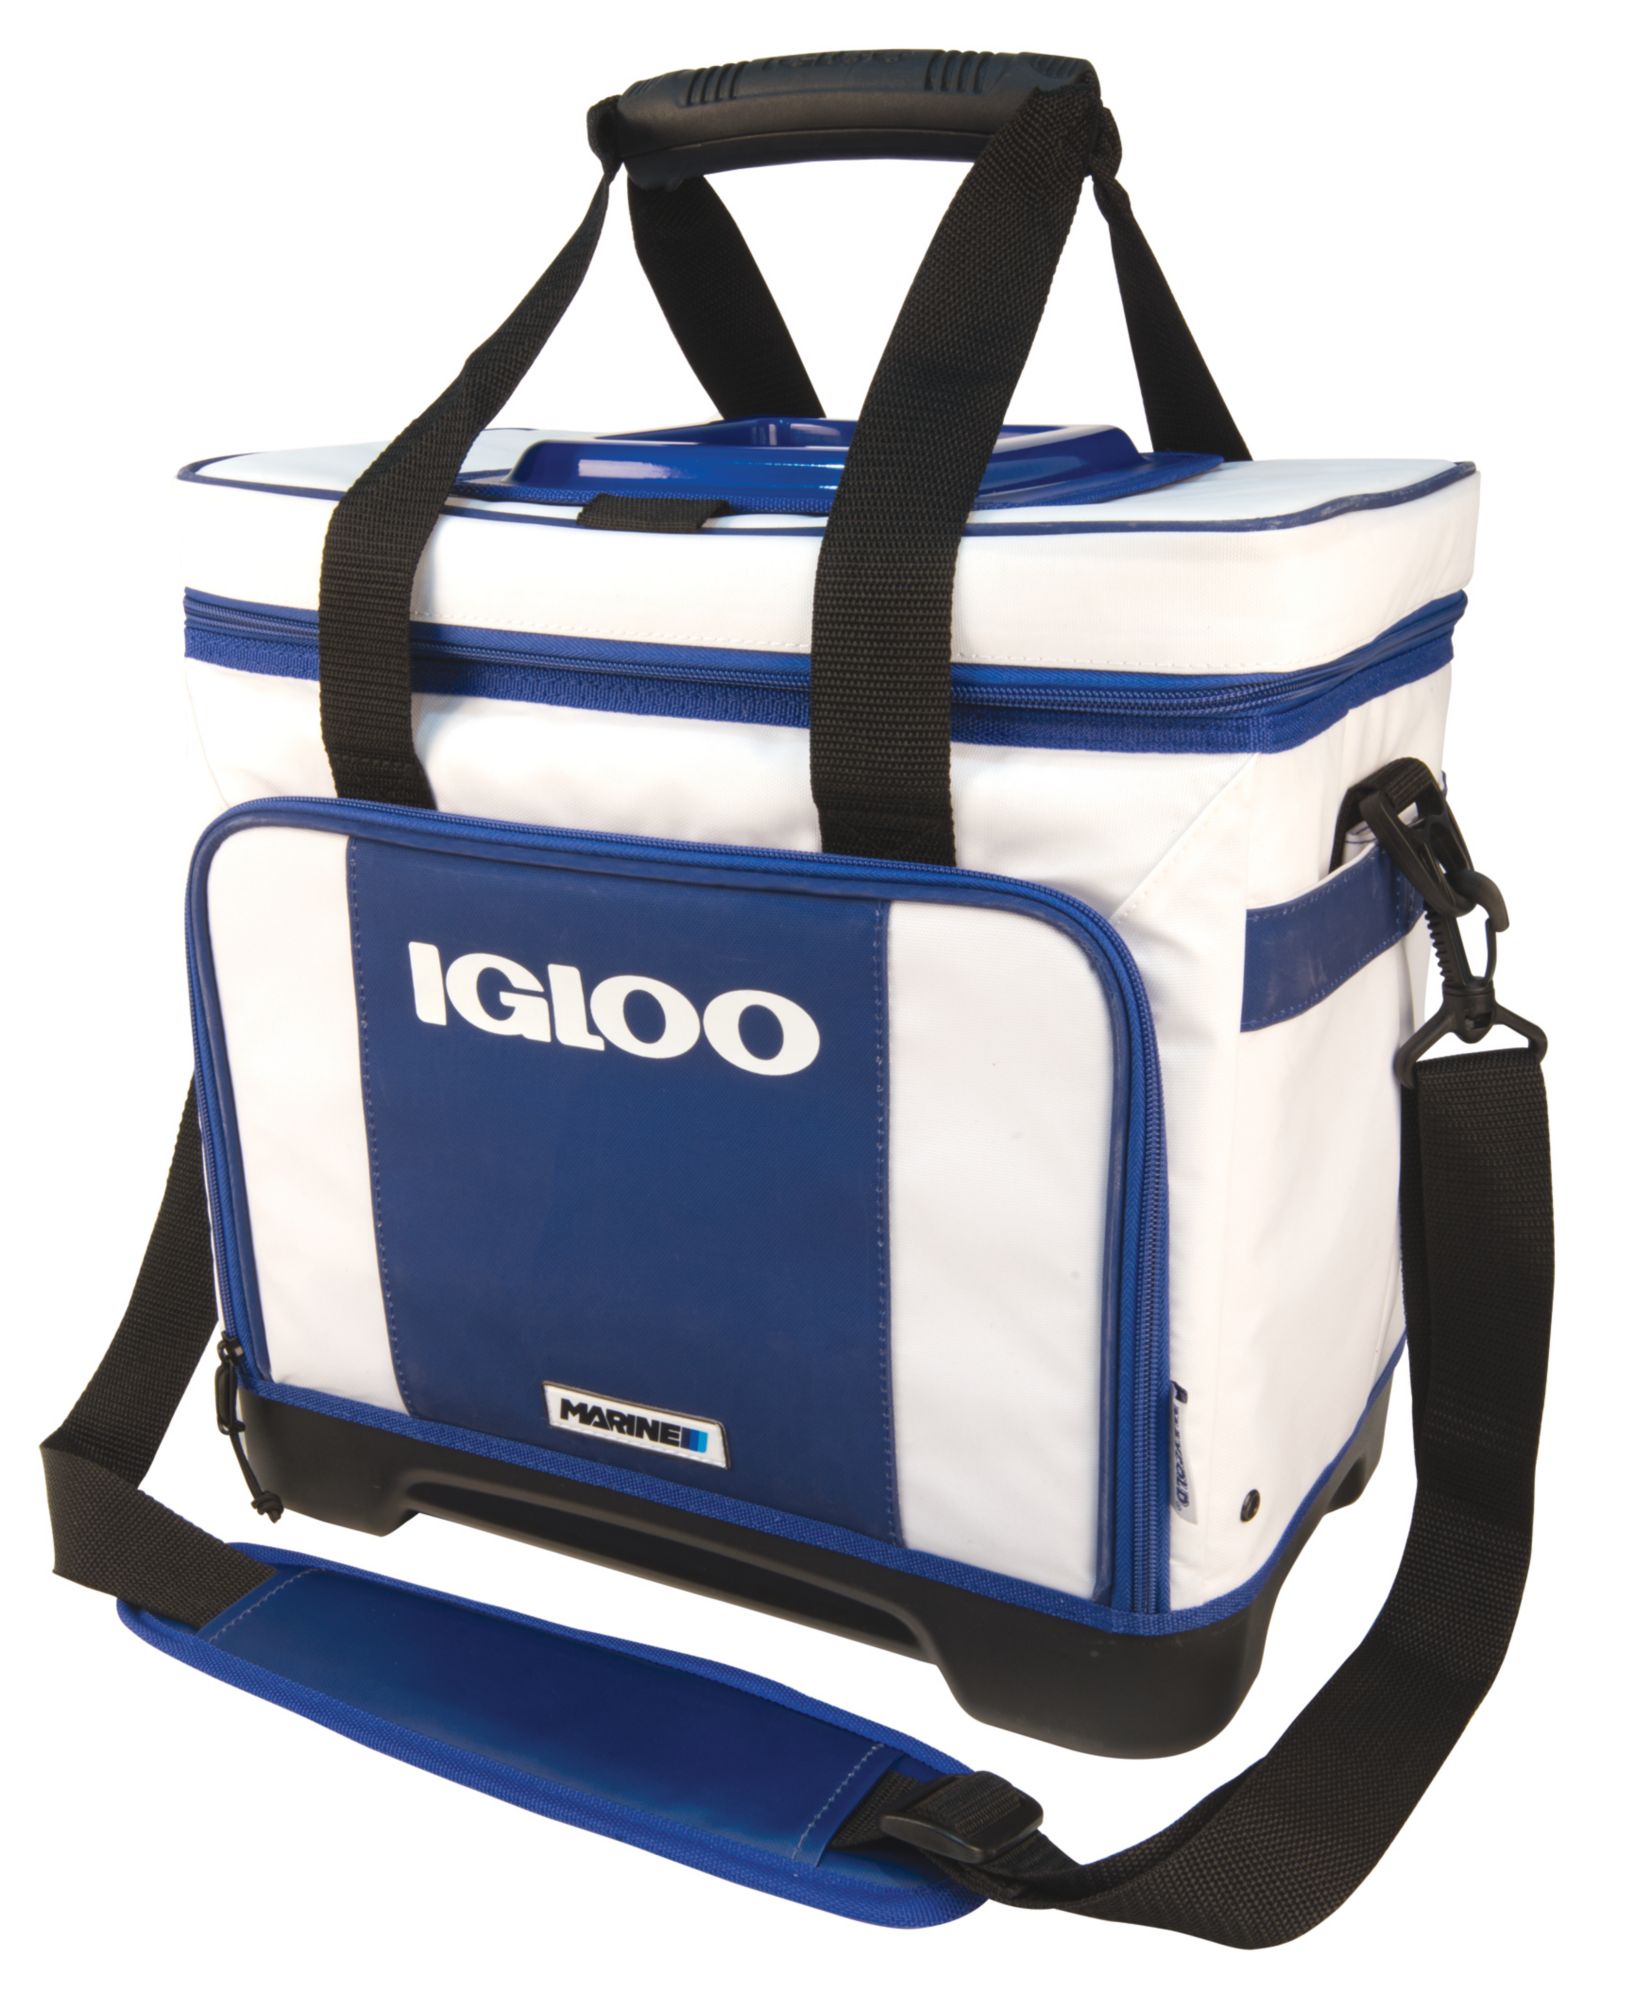 igloo cooler bag